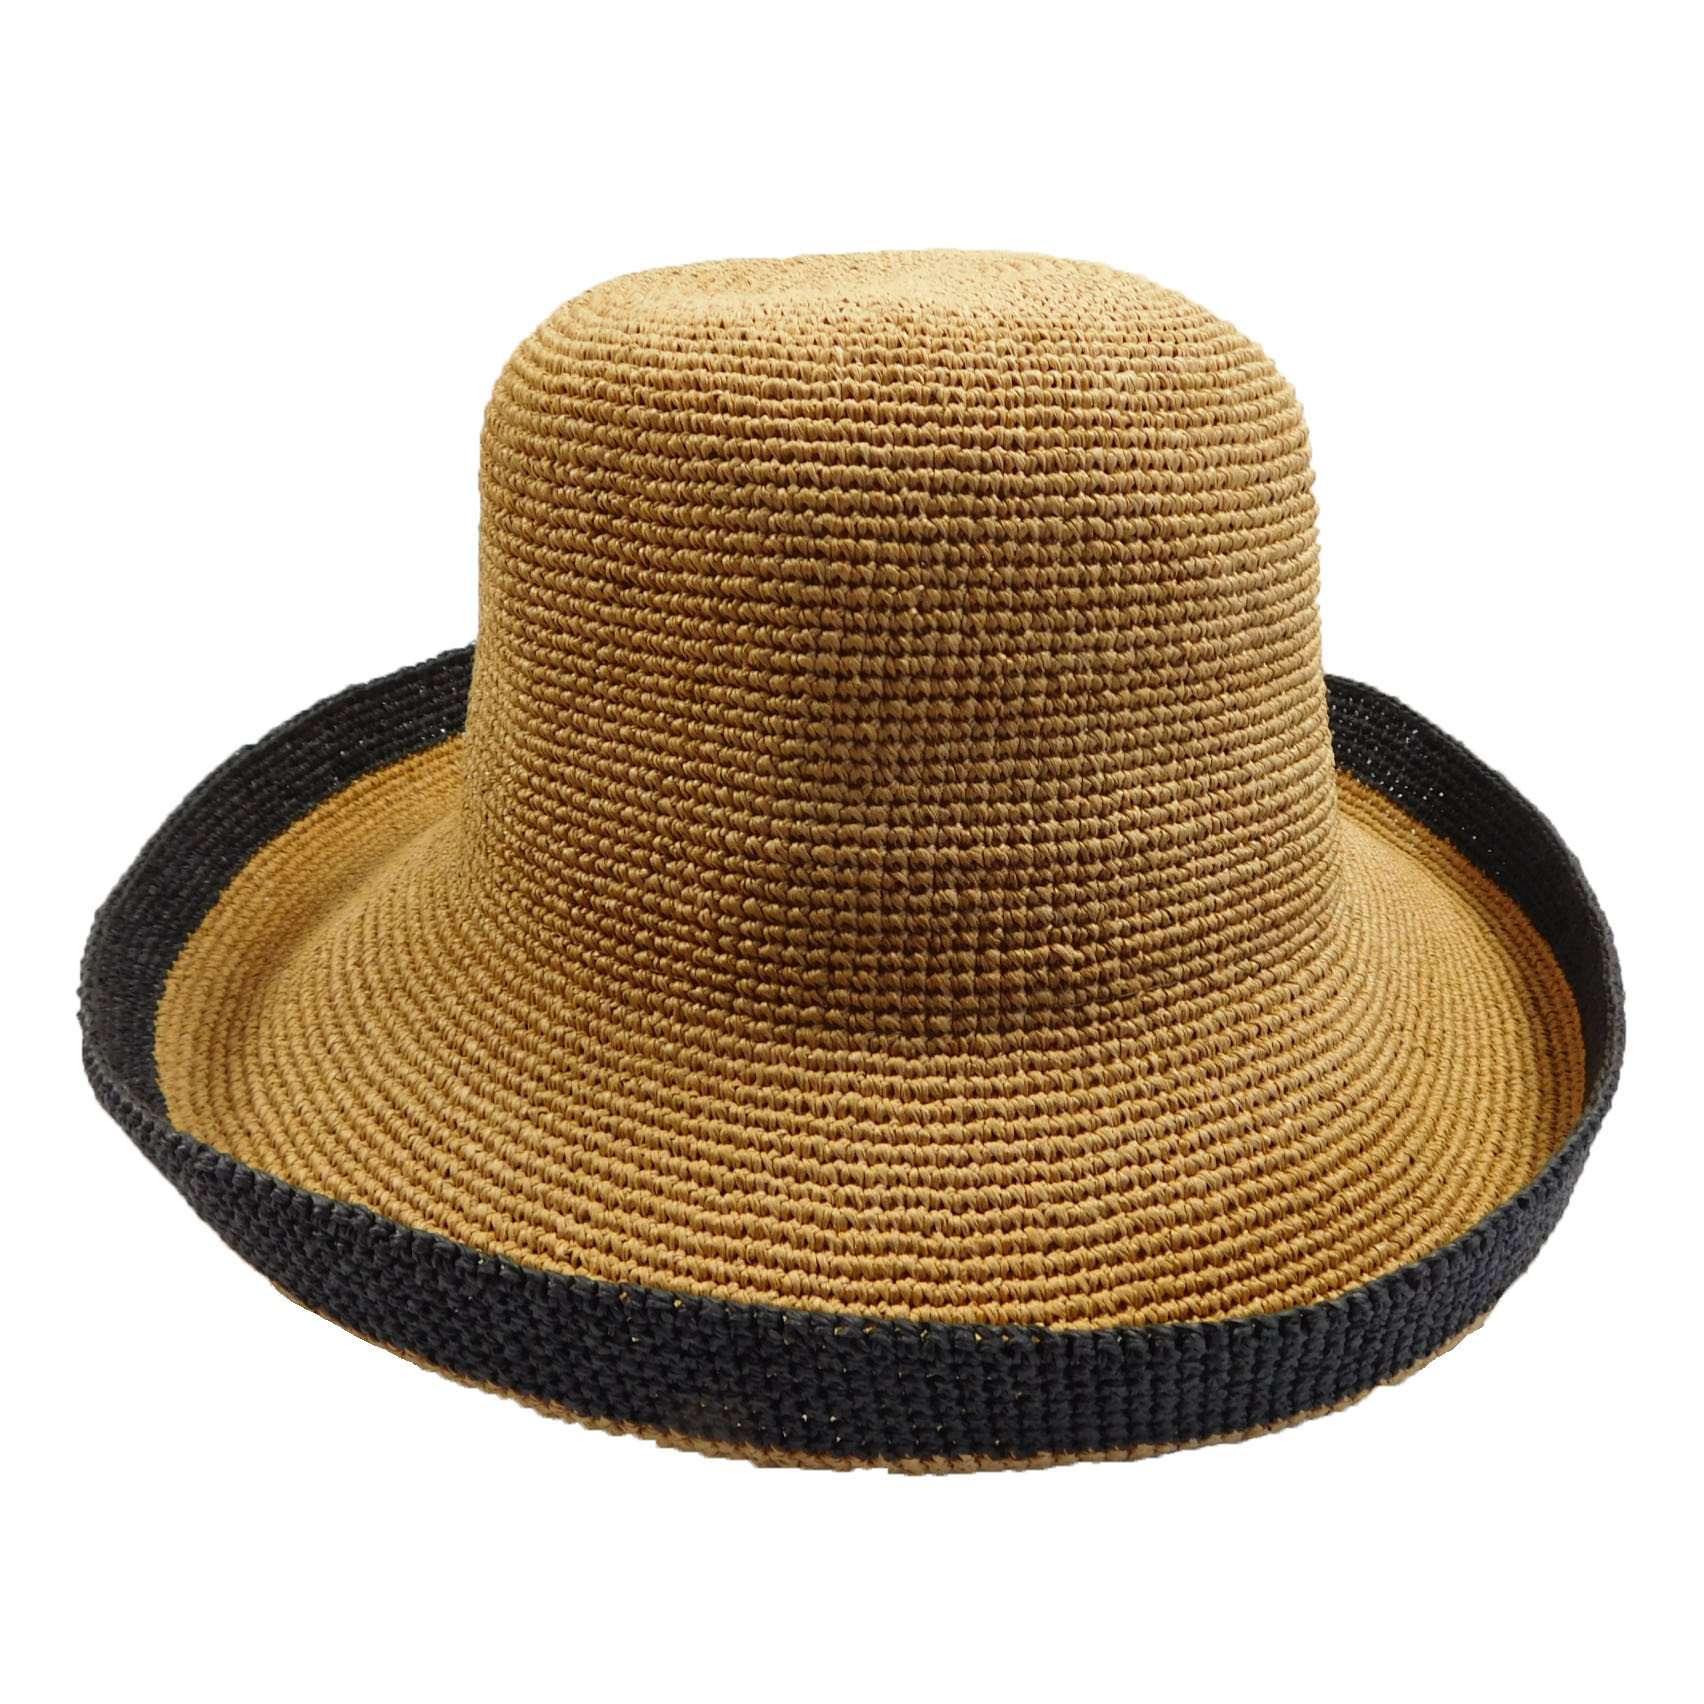 Hand Crocheted Turned Up Brim Hat - Rust Kettle Brim Hat Boardwalk Style Hats WSda743RT Rust  